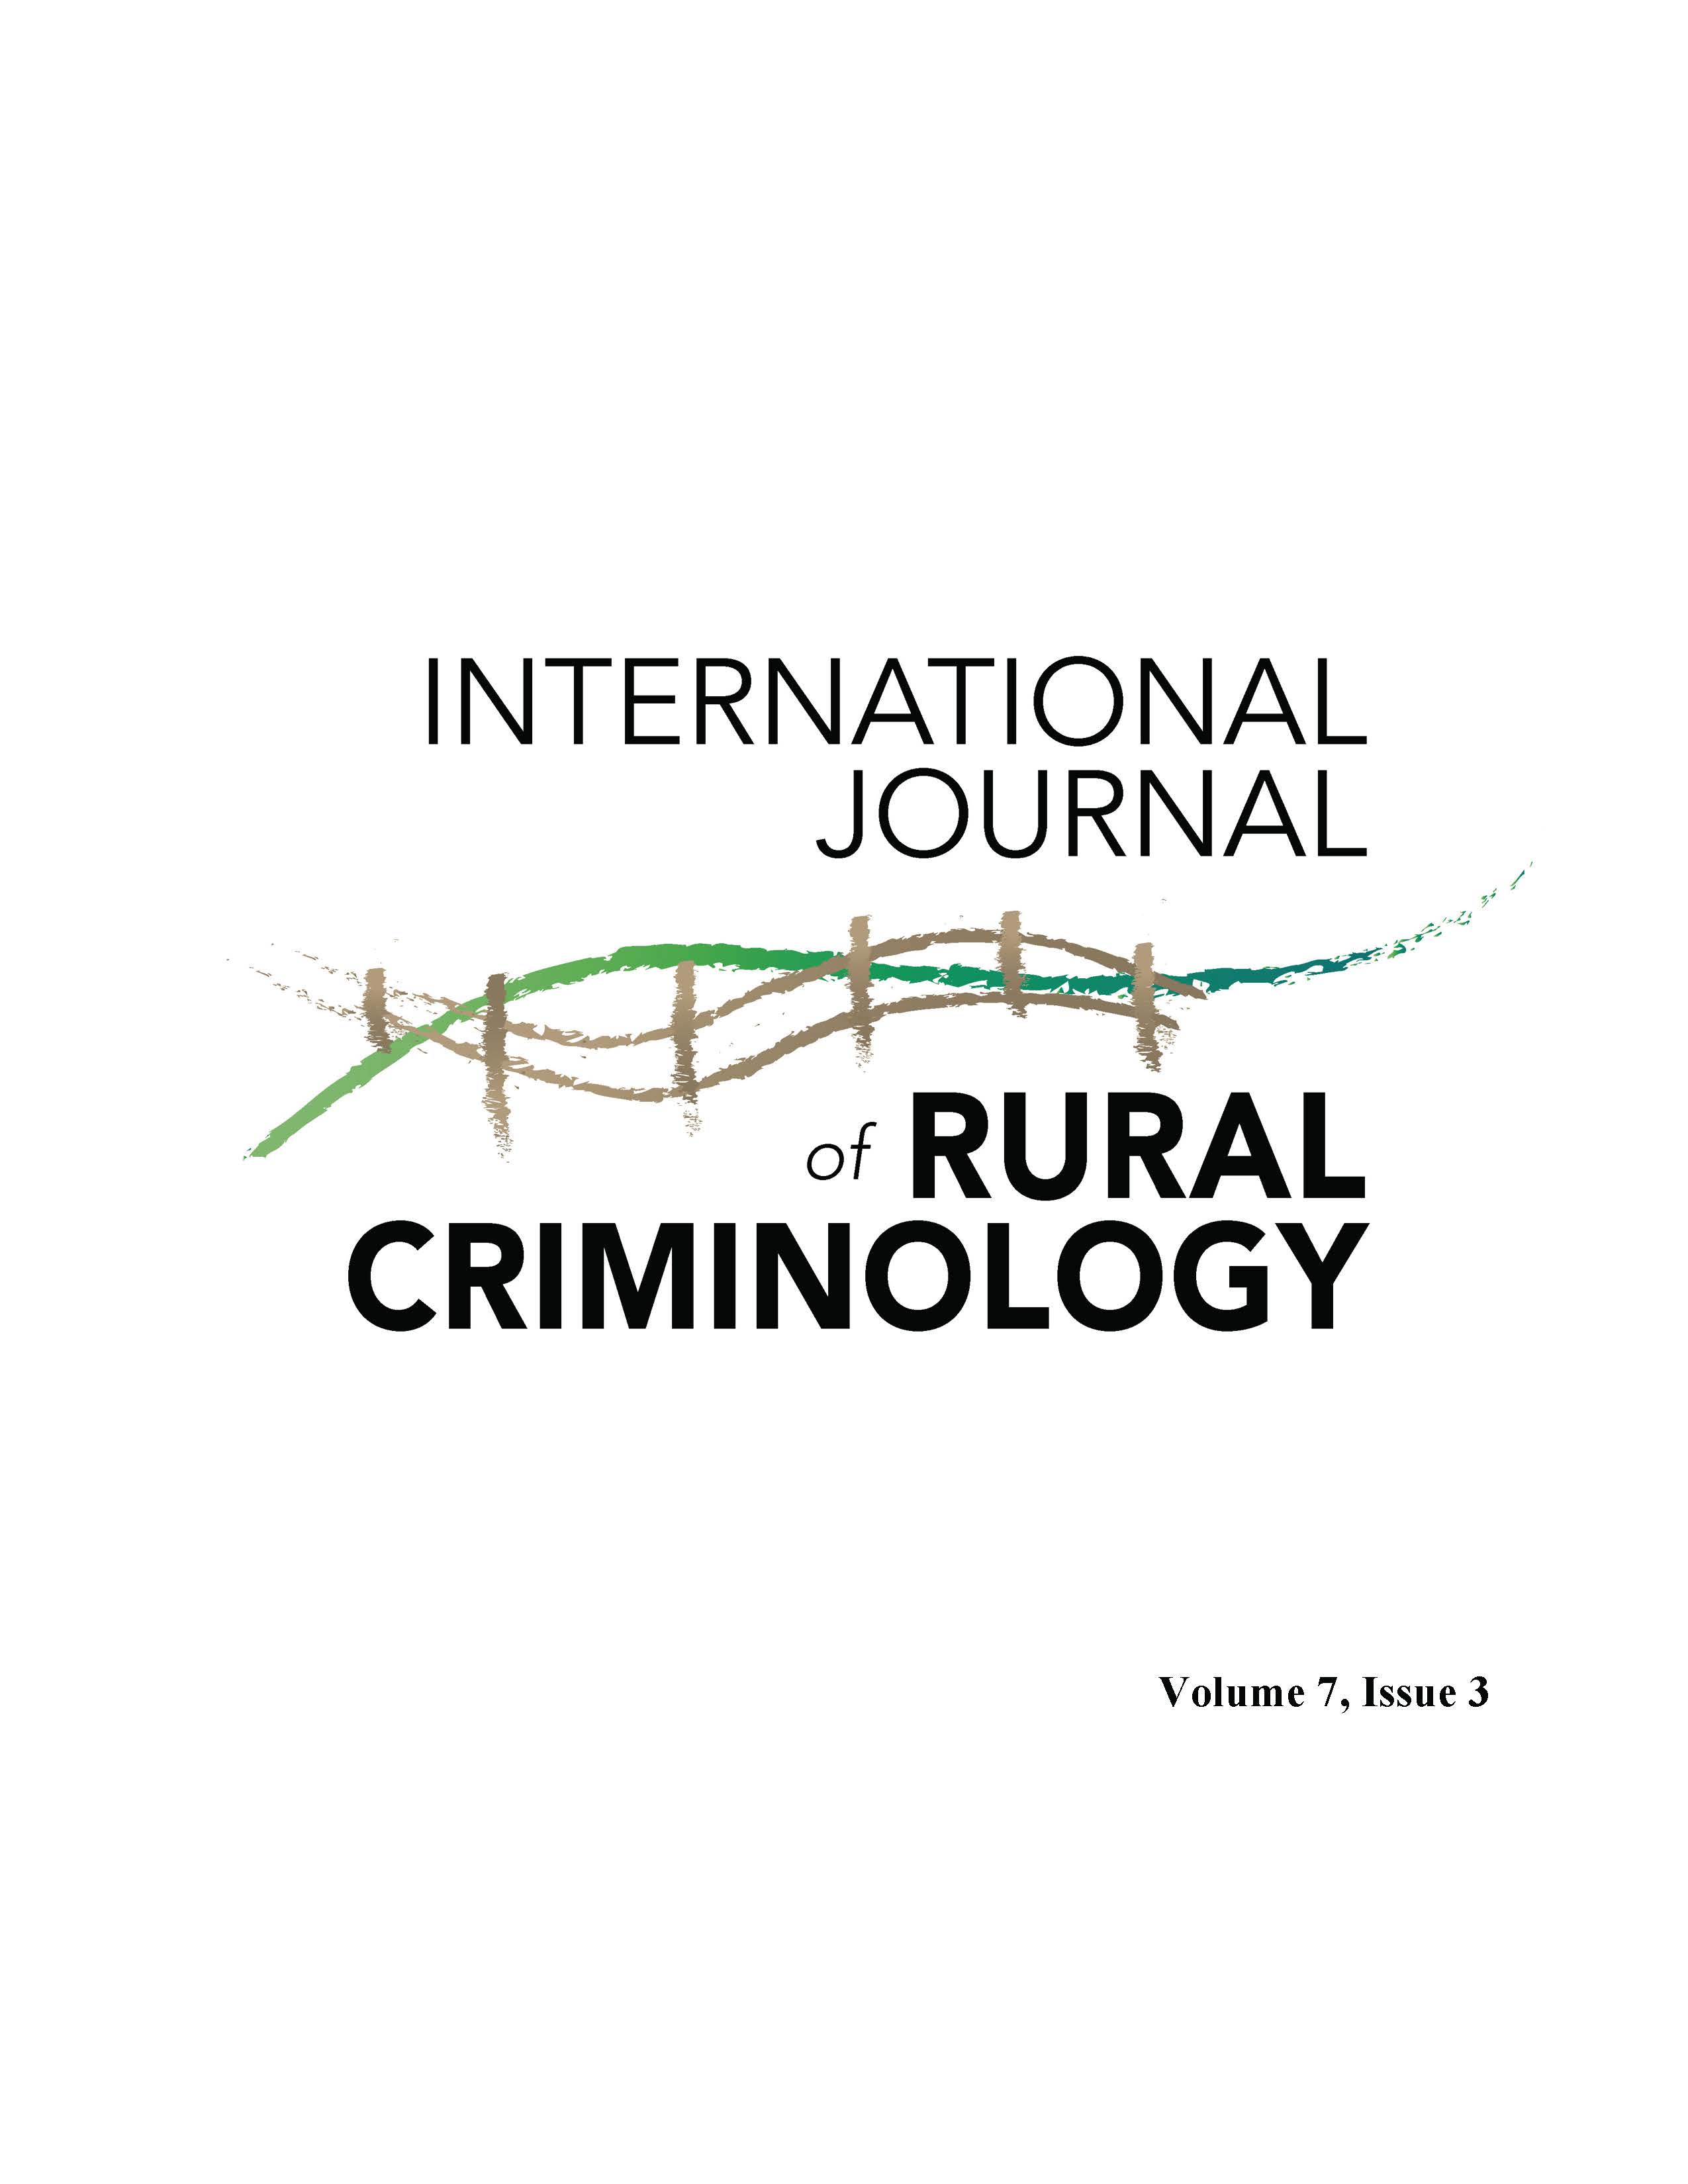 Cover image for the International Journal of Rural Criminology Volume 7, Number 3